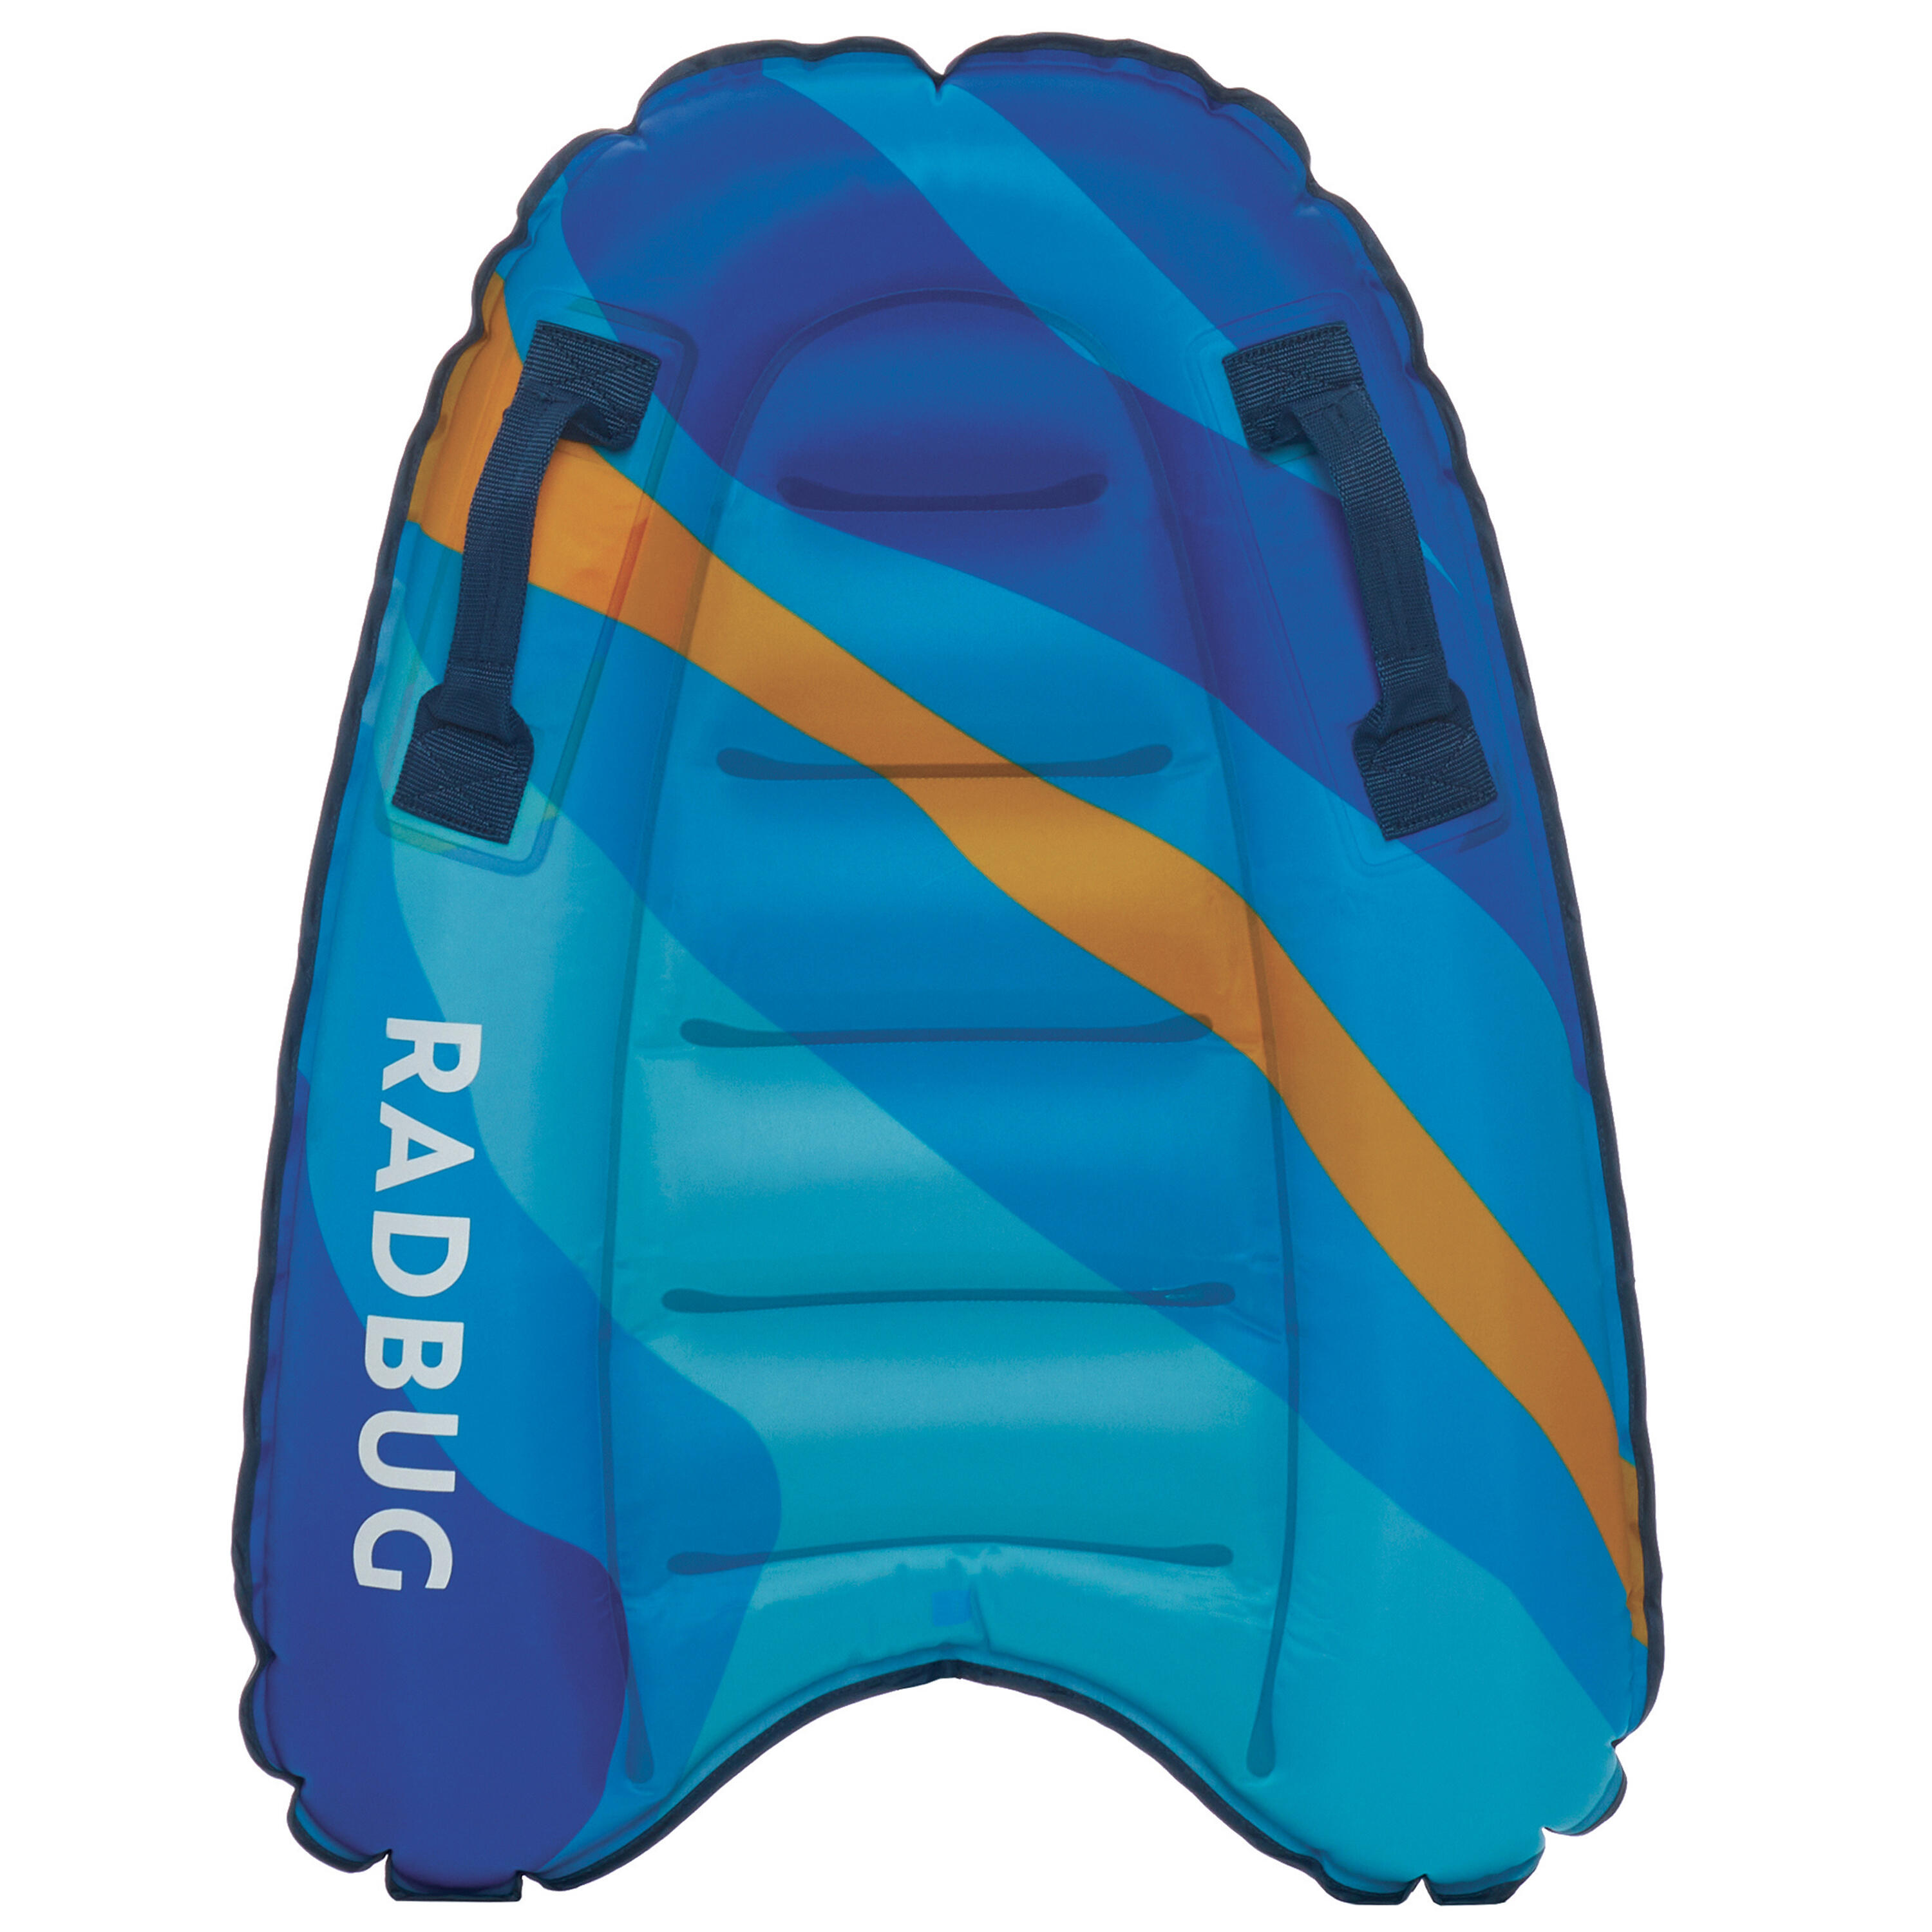 Bodyboard gonflabilă DISCOVERY Albastru-Galben Copii 4-8 ani (15-25 kg)